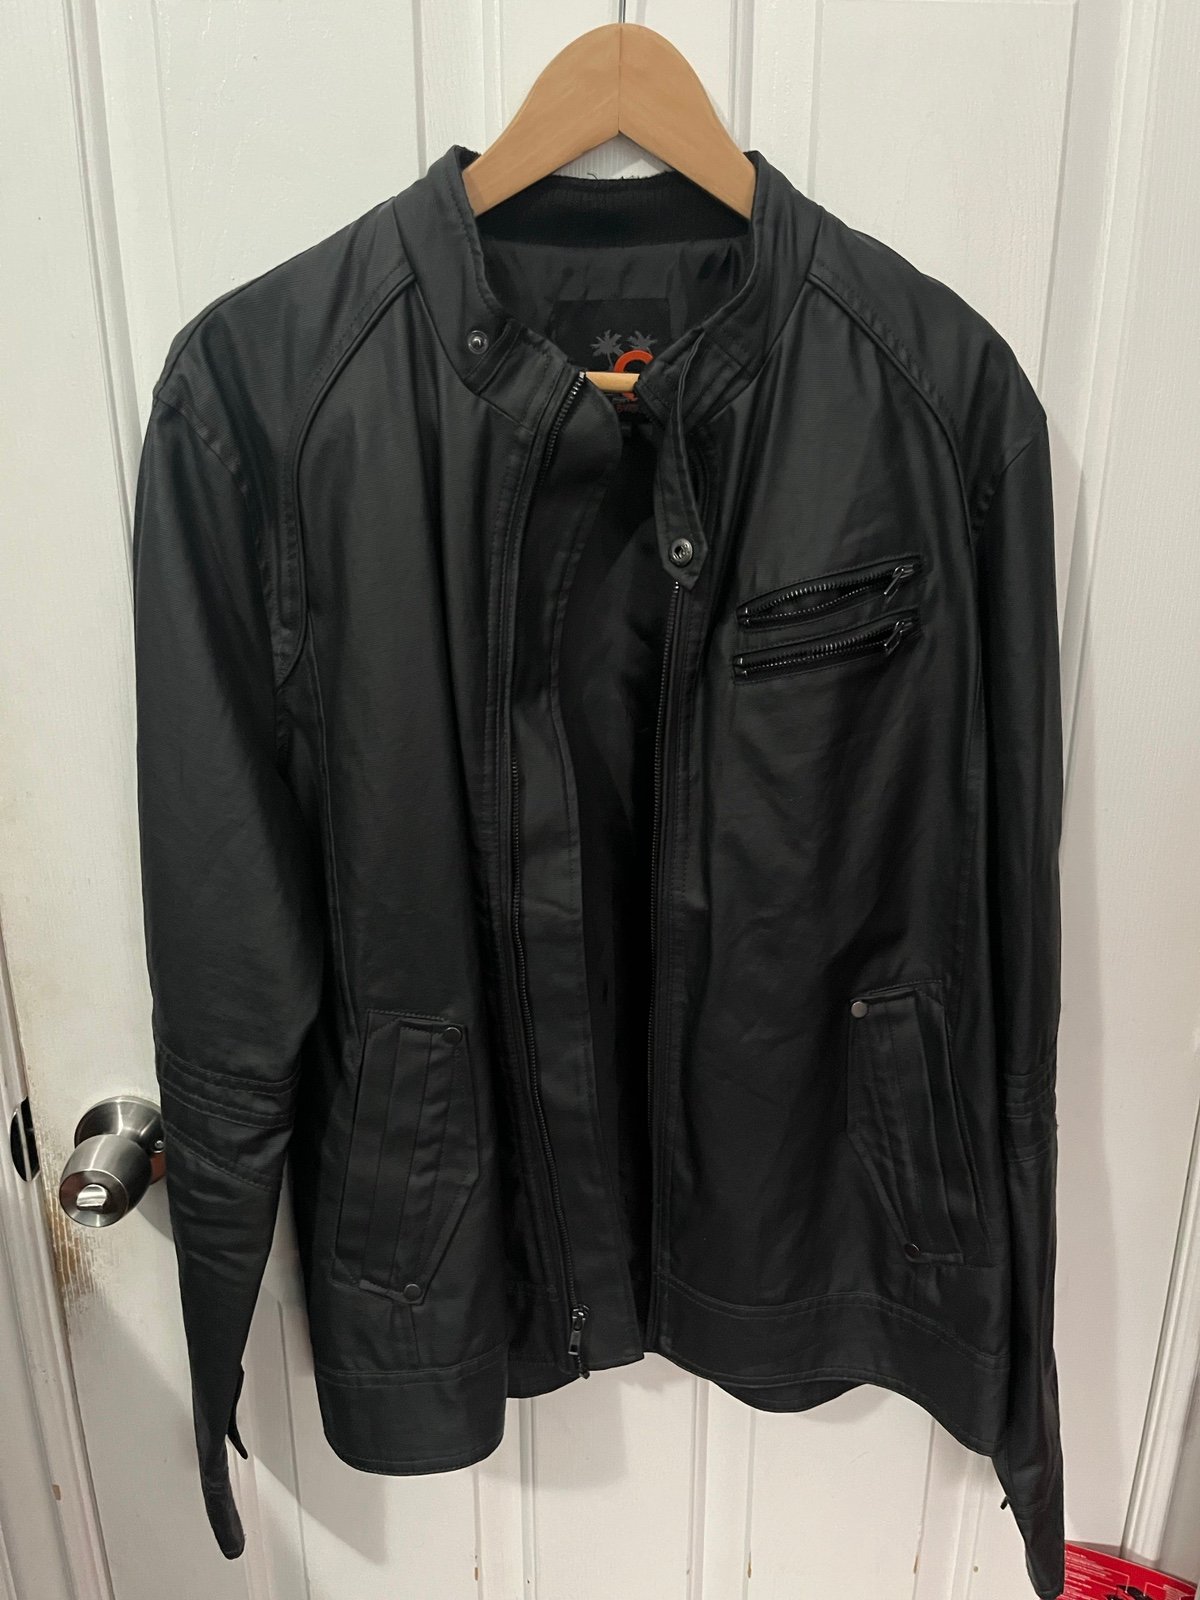 GUESS leather jacket GiyaEiyLk